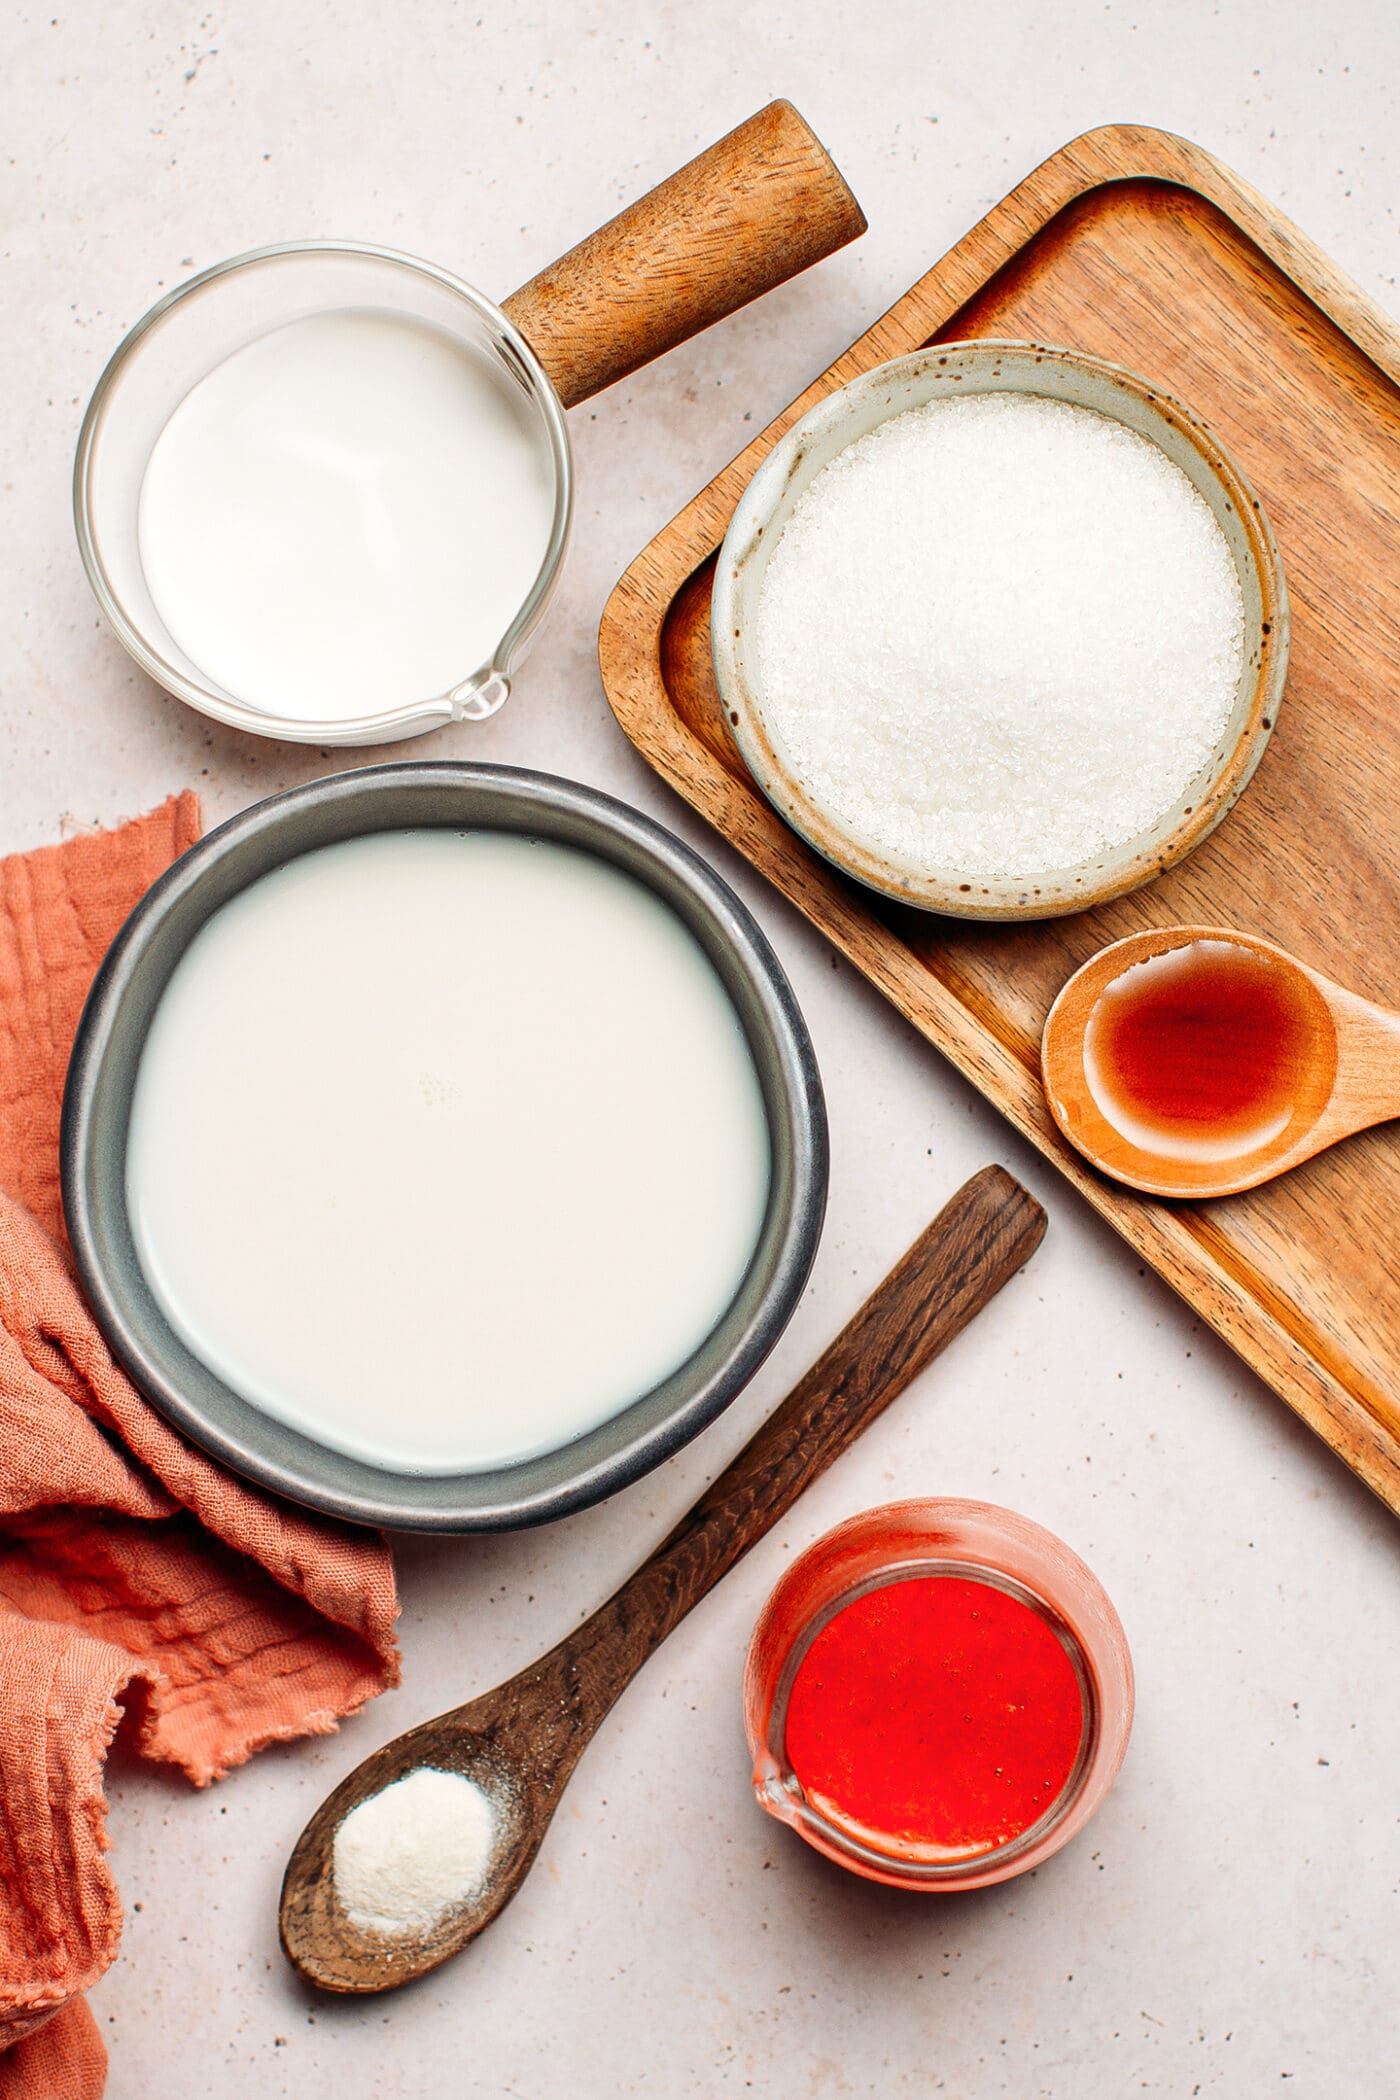 Ingredients like almond milk, coconut milk, sugar, and vanilla extract.